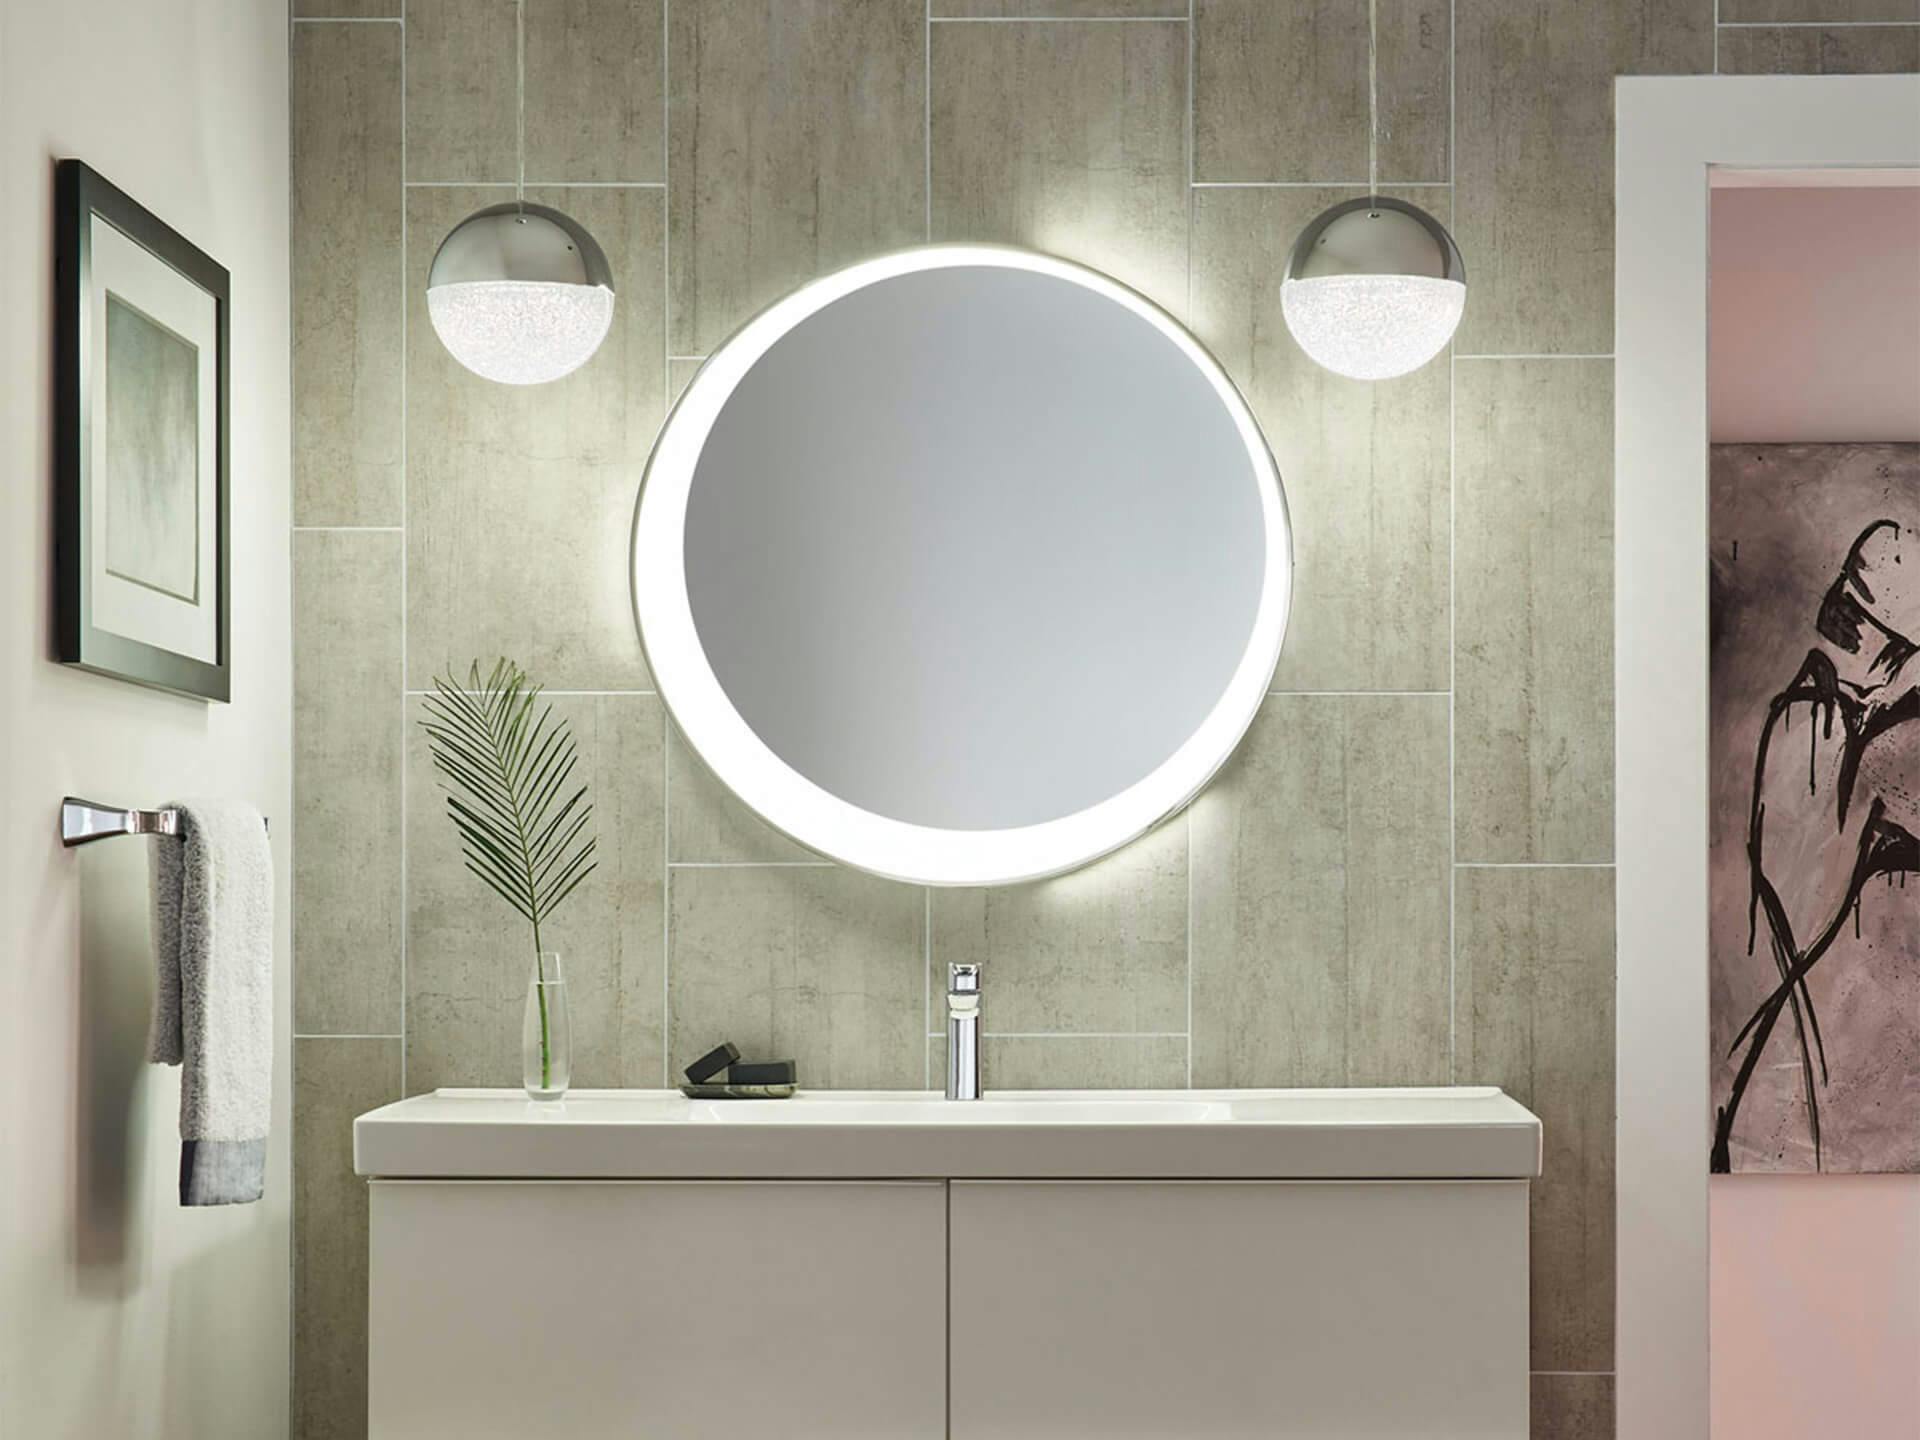 Bathroom vanity with pendant lights